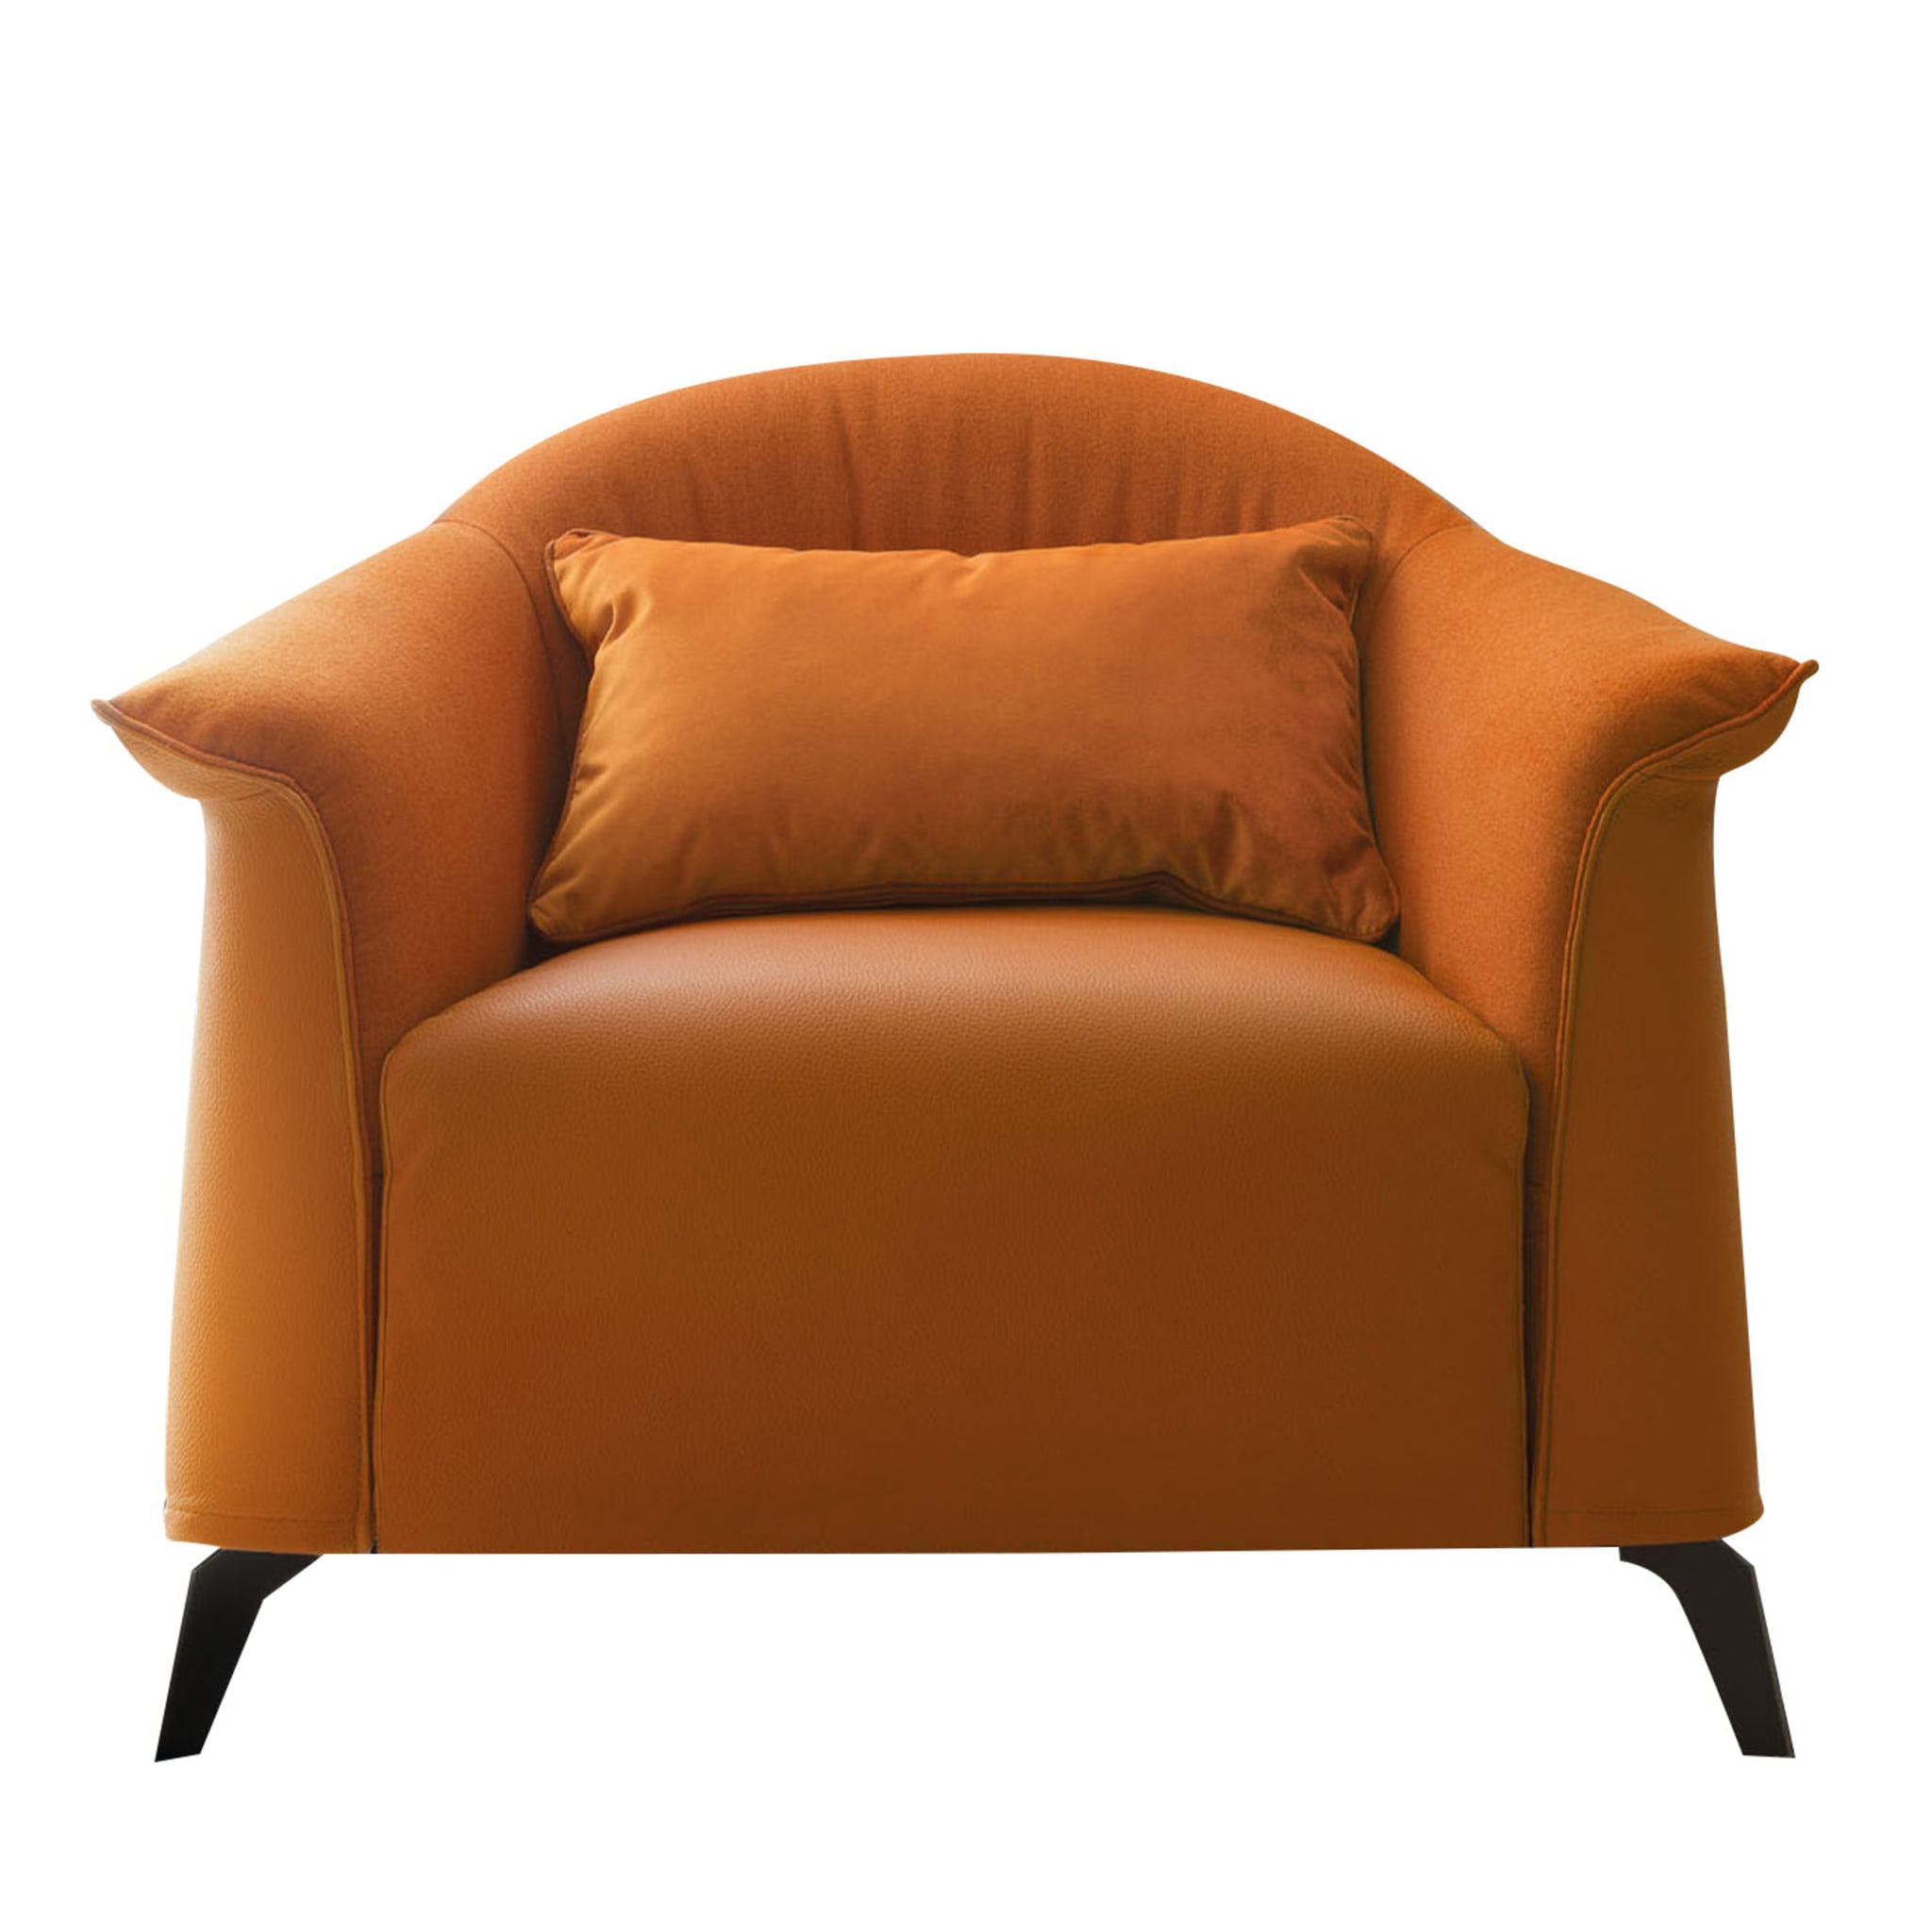 Cerere Orange Armchair  - Main view